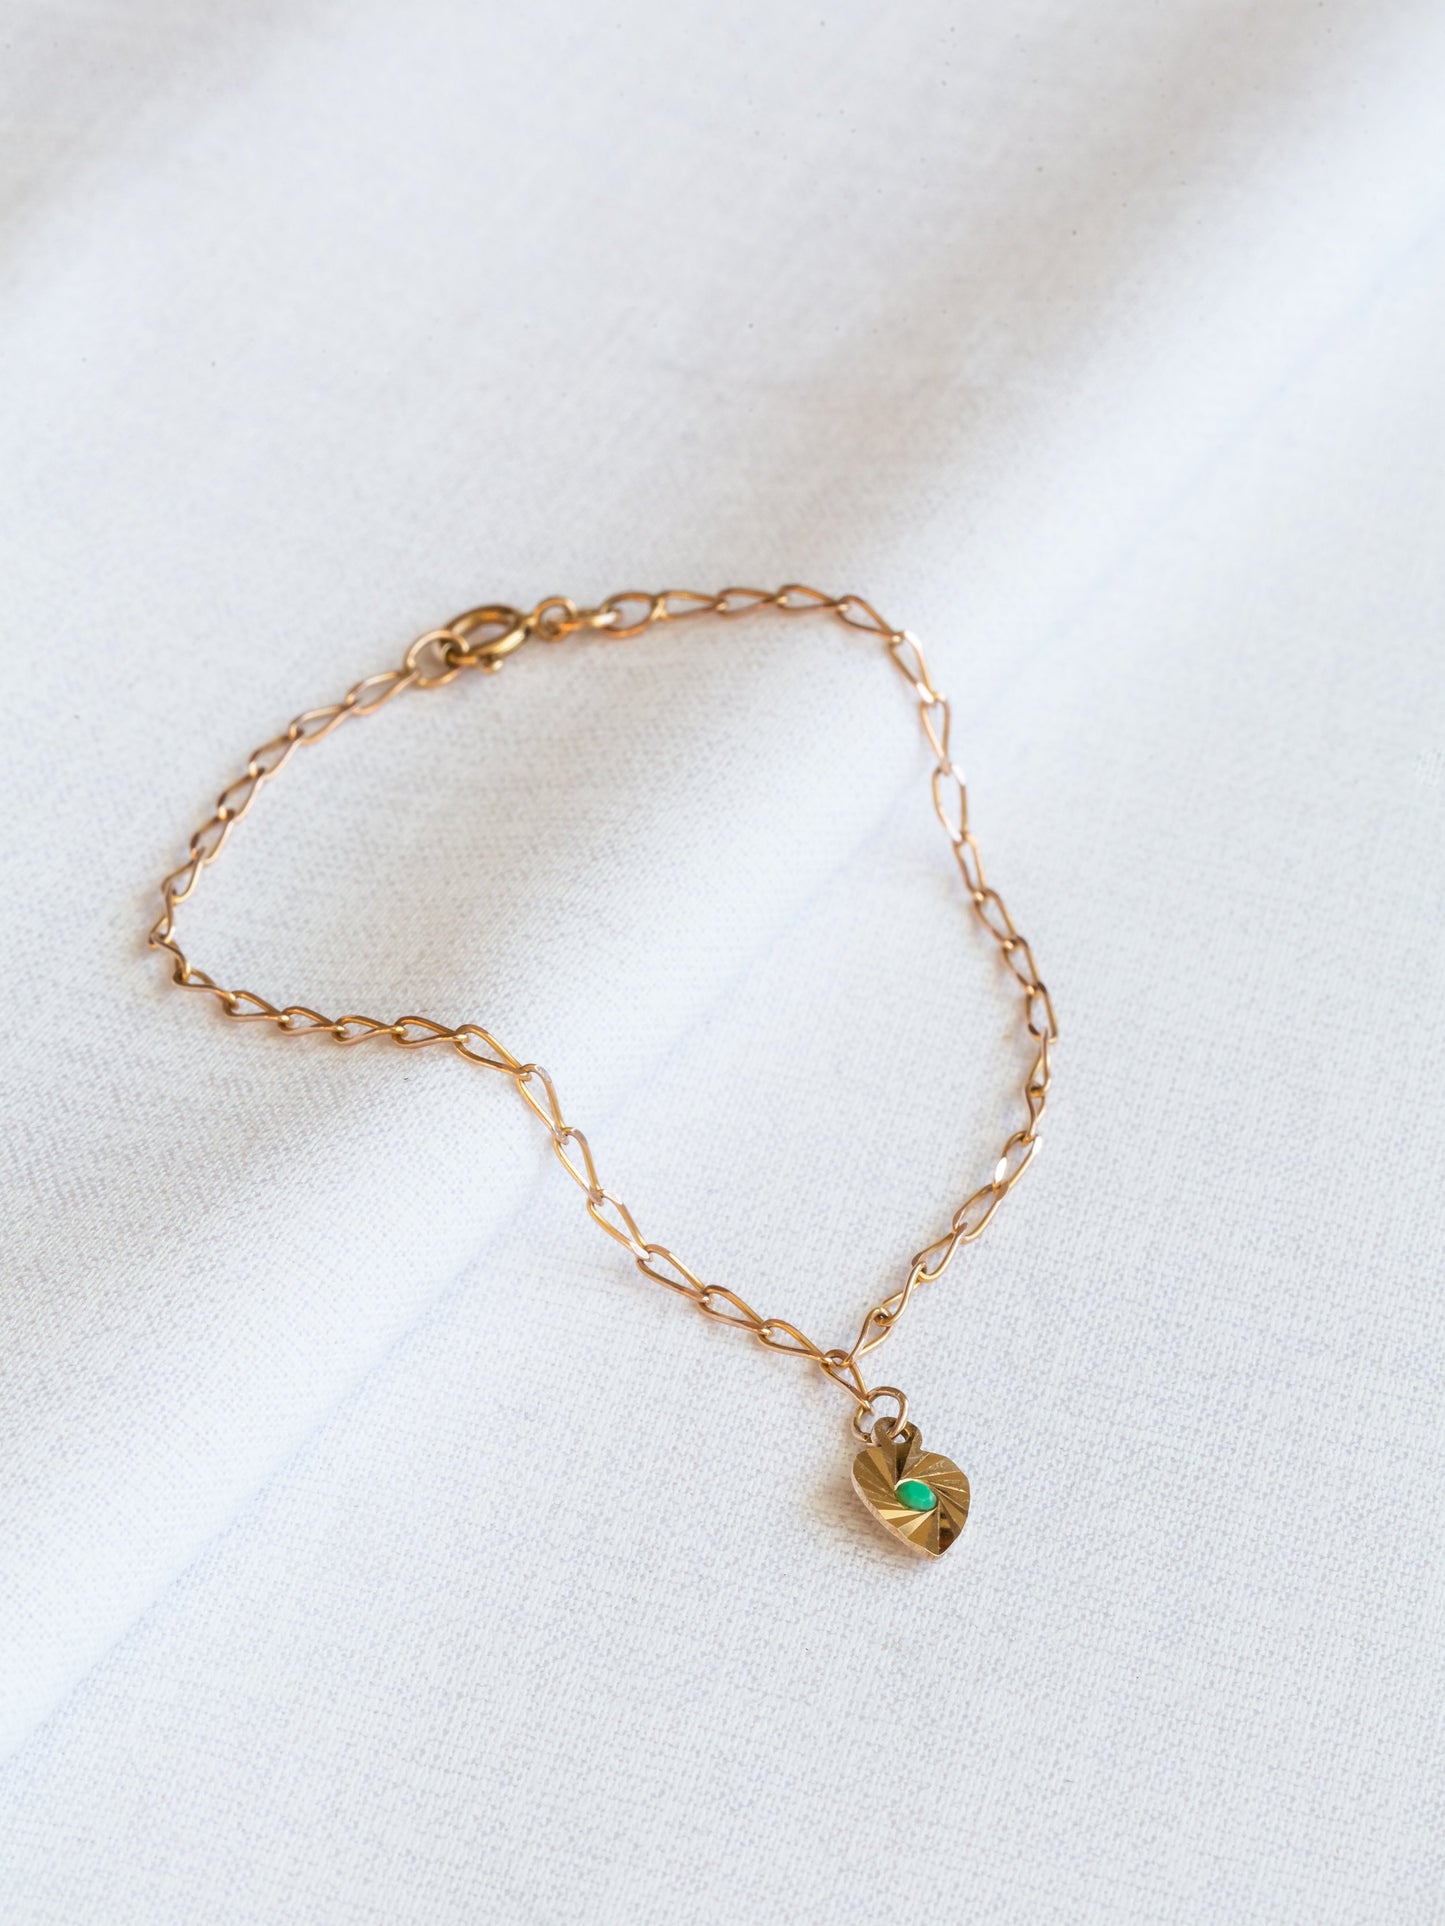 Vintage 9ct Gold Heart Charm Bracelet